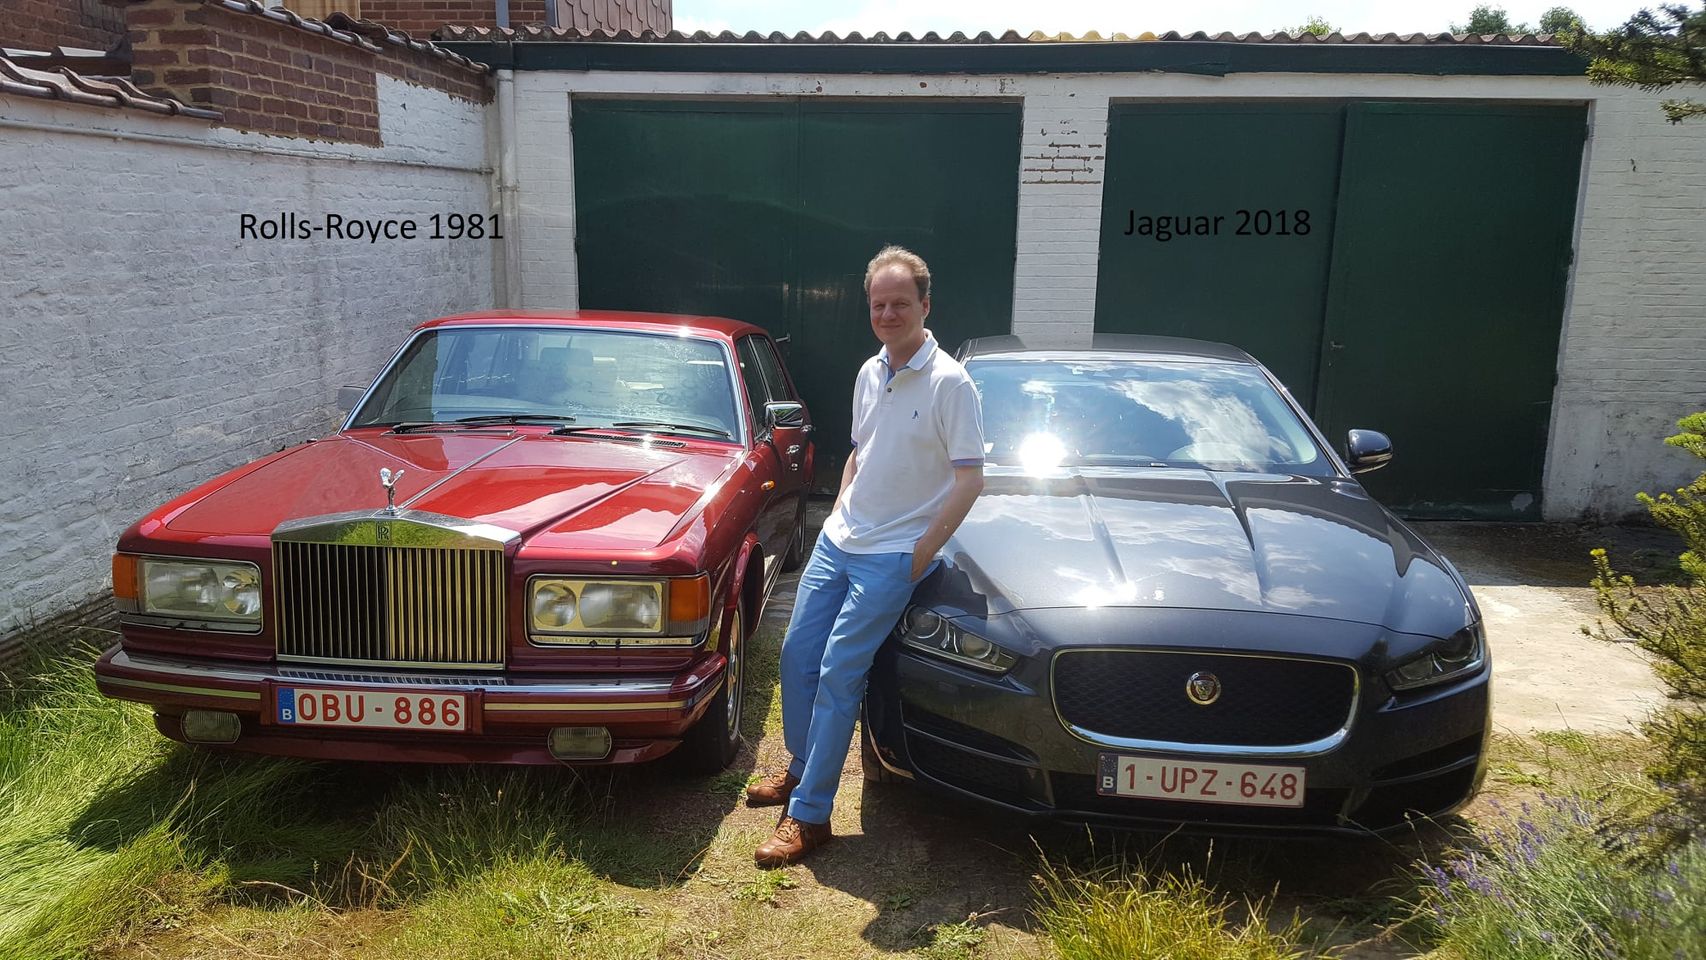 Rolls-Royce & Jaguar